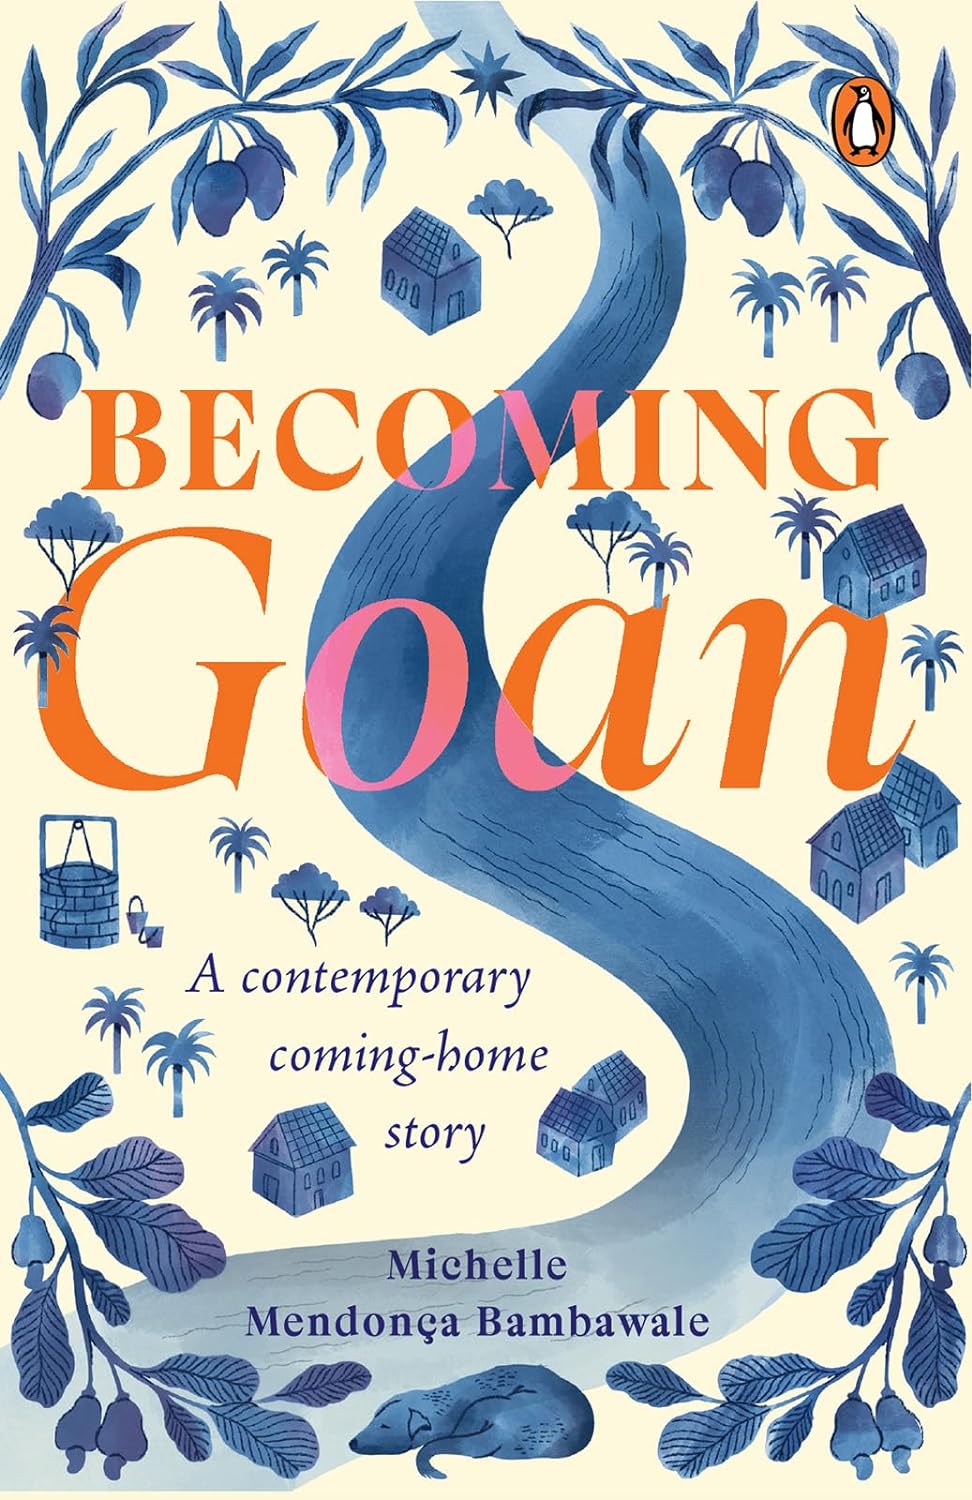 Becoming Goan by Michelle Mendonça Bambawale